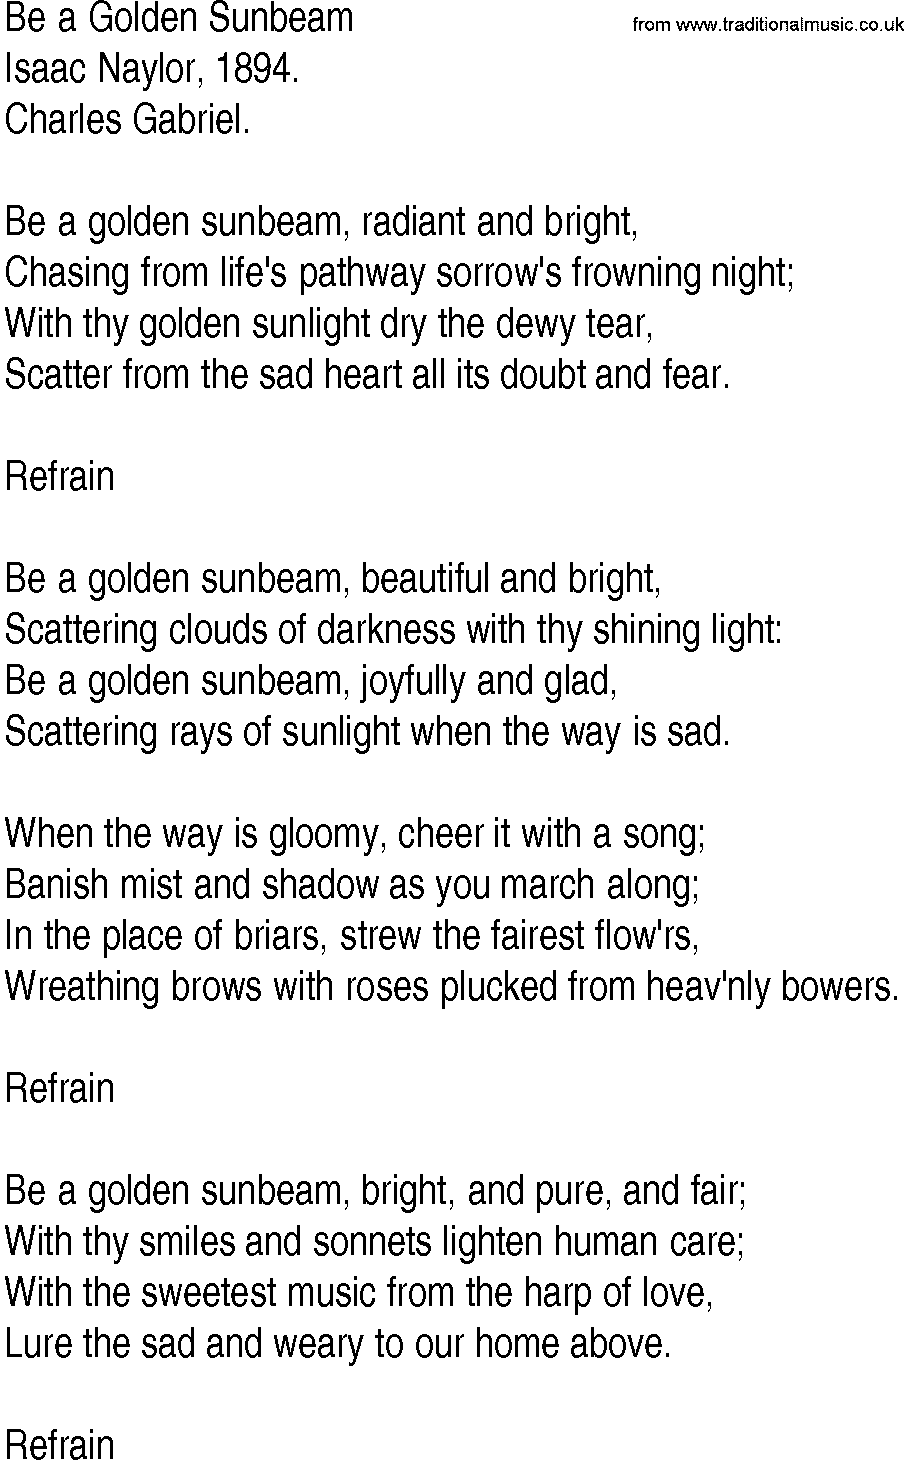 Hymn and Gospel Song: Be a Golden Sunbeam by Isaac Naylor lyrics